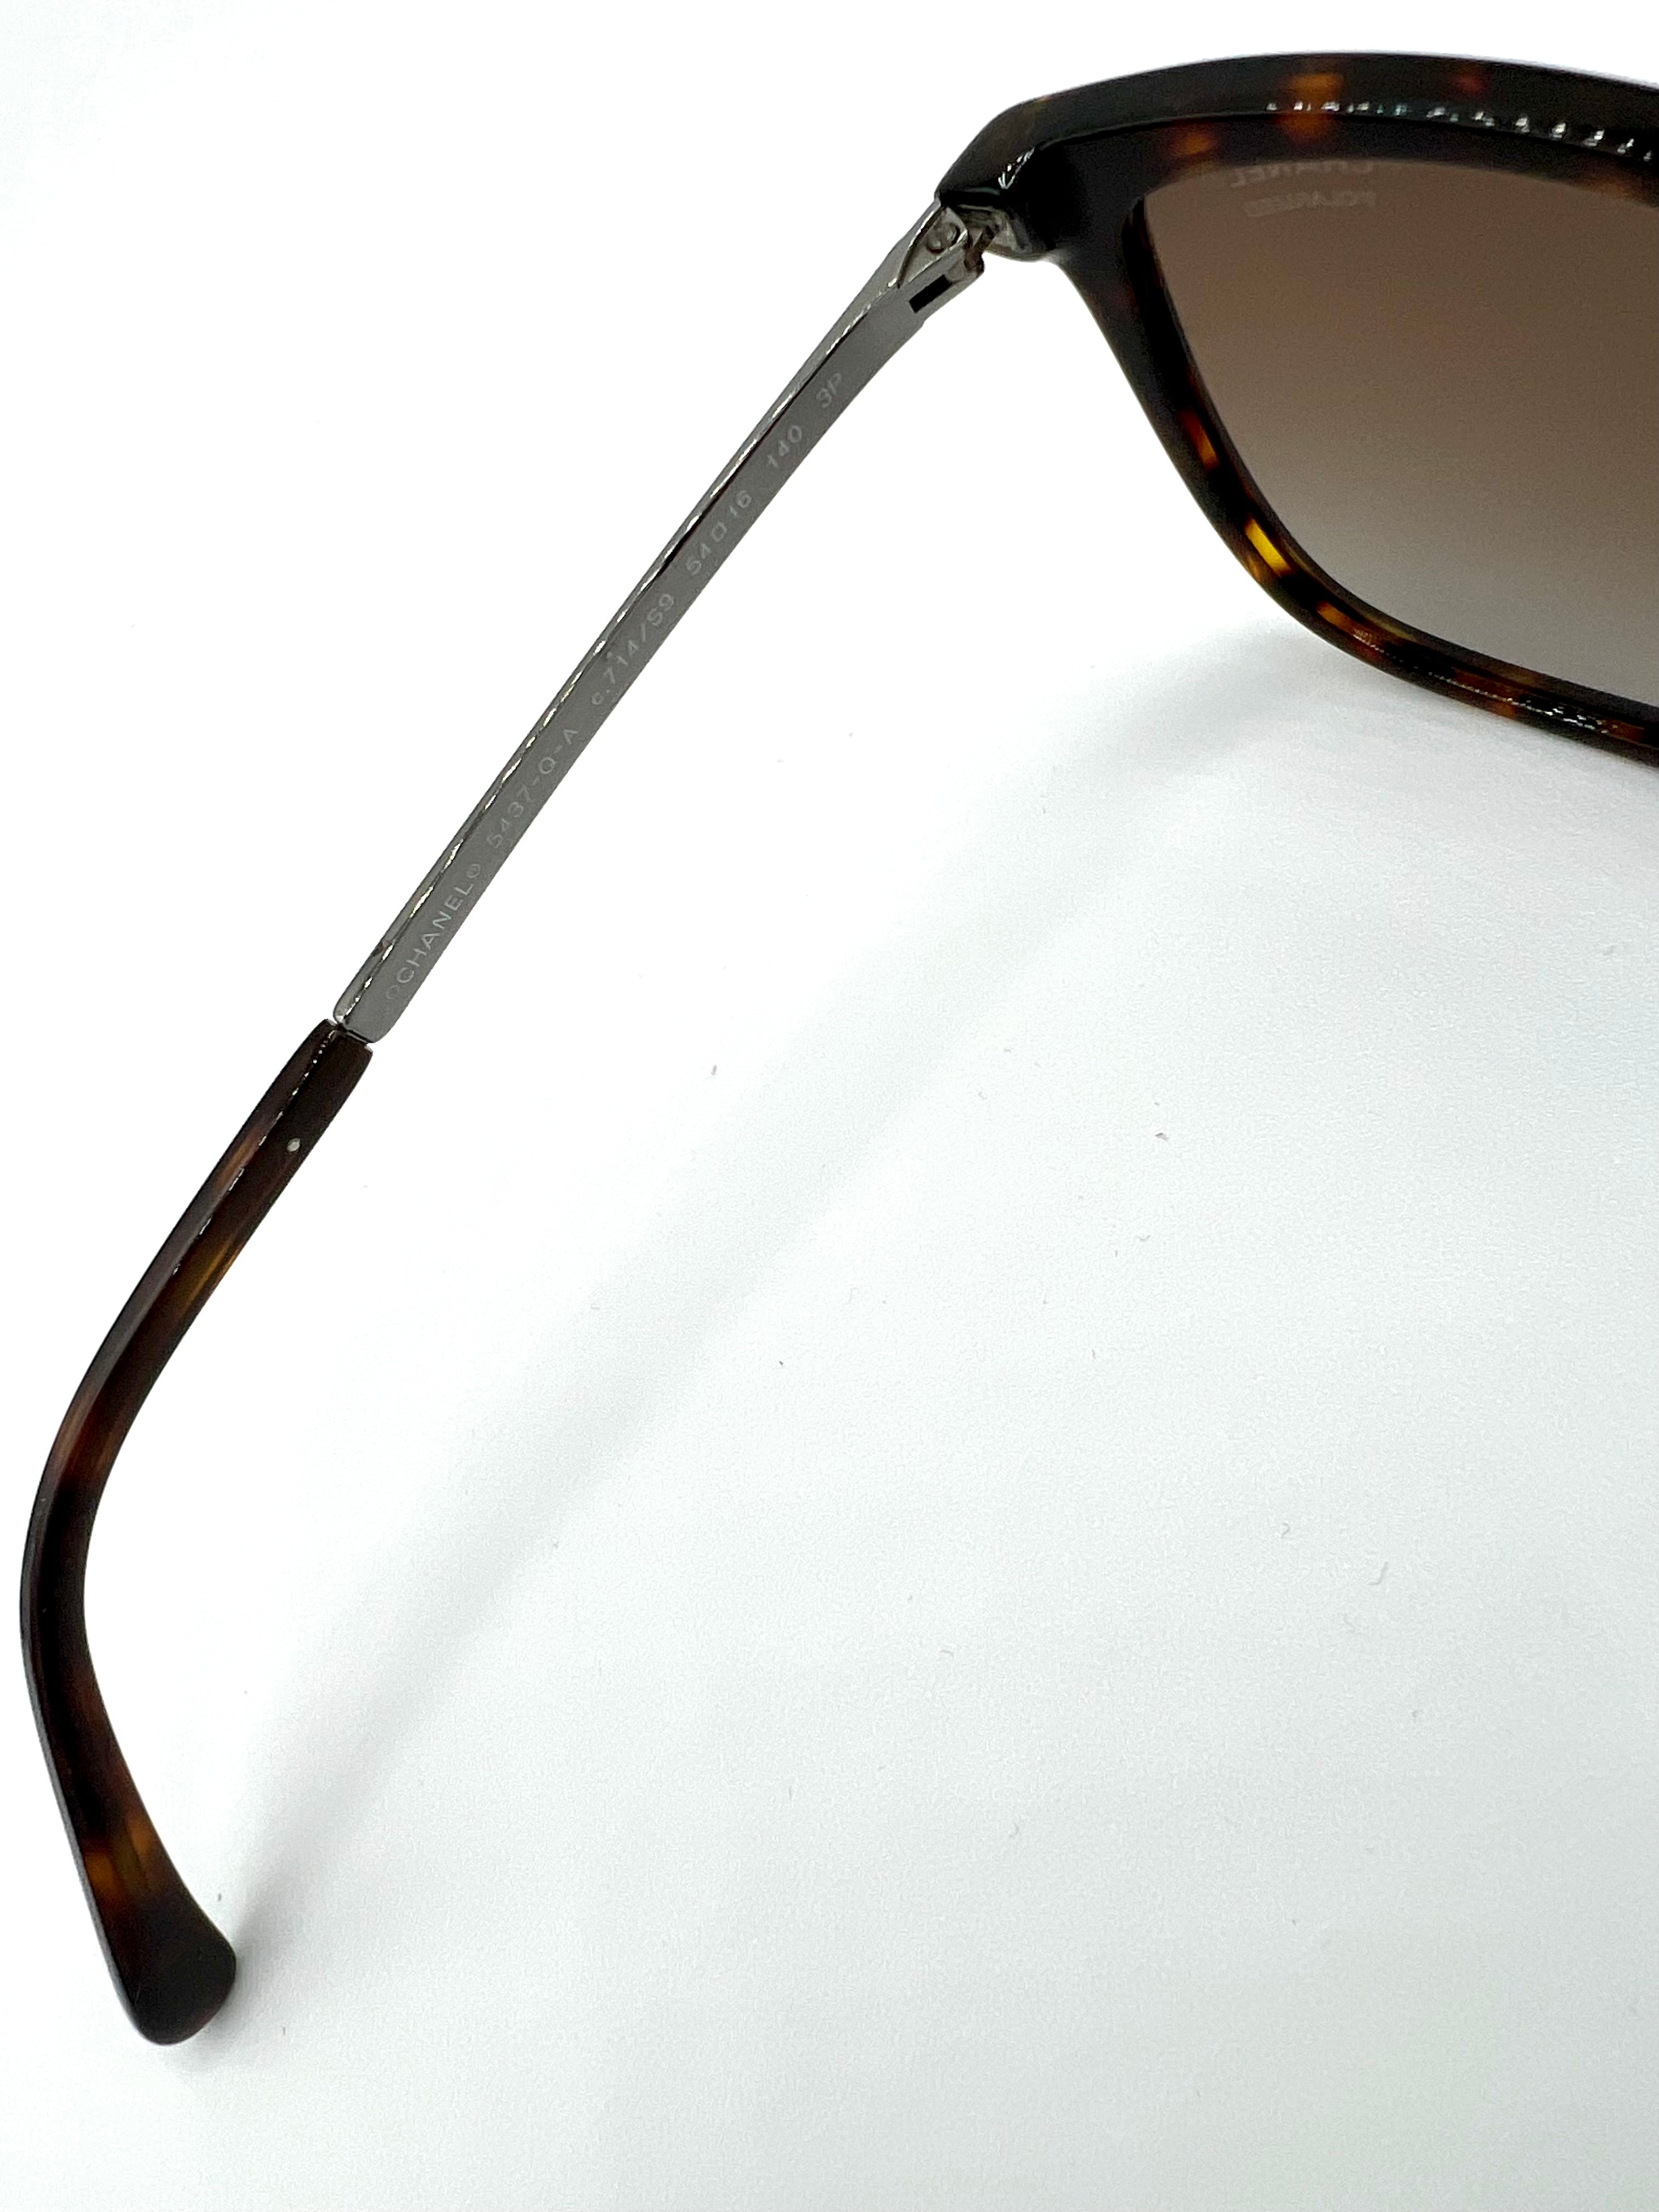 chanel gold cat eye sunglasses vintage